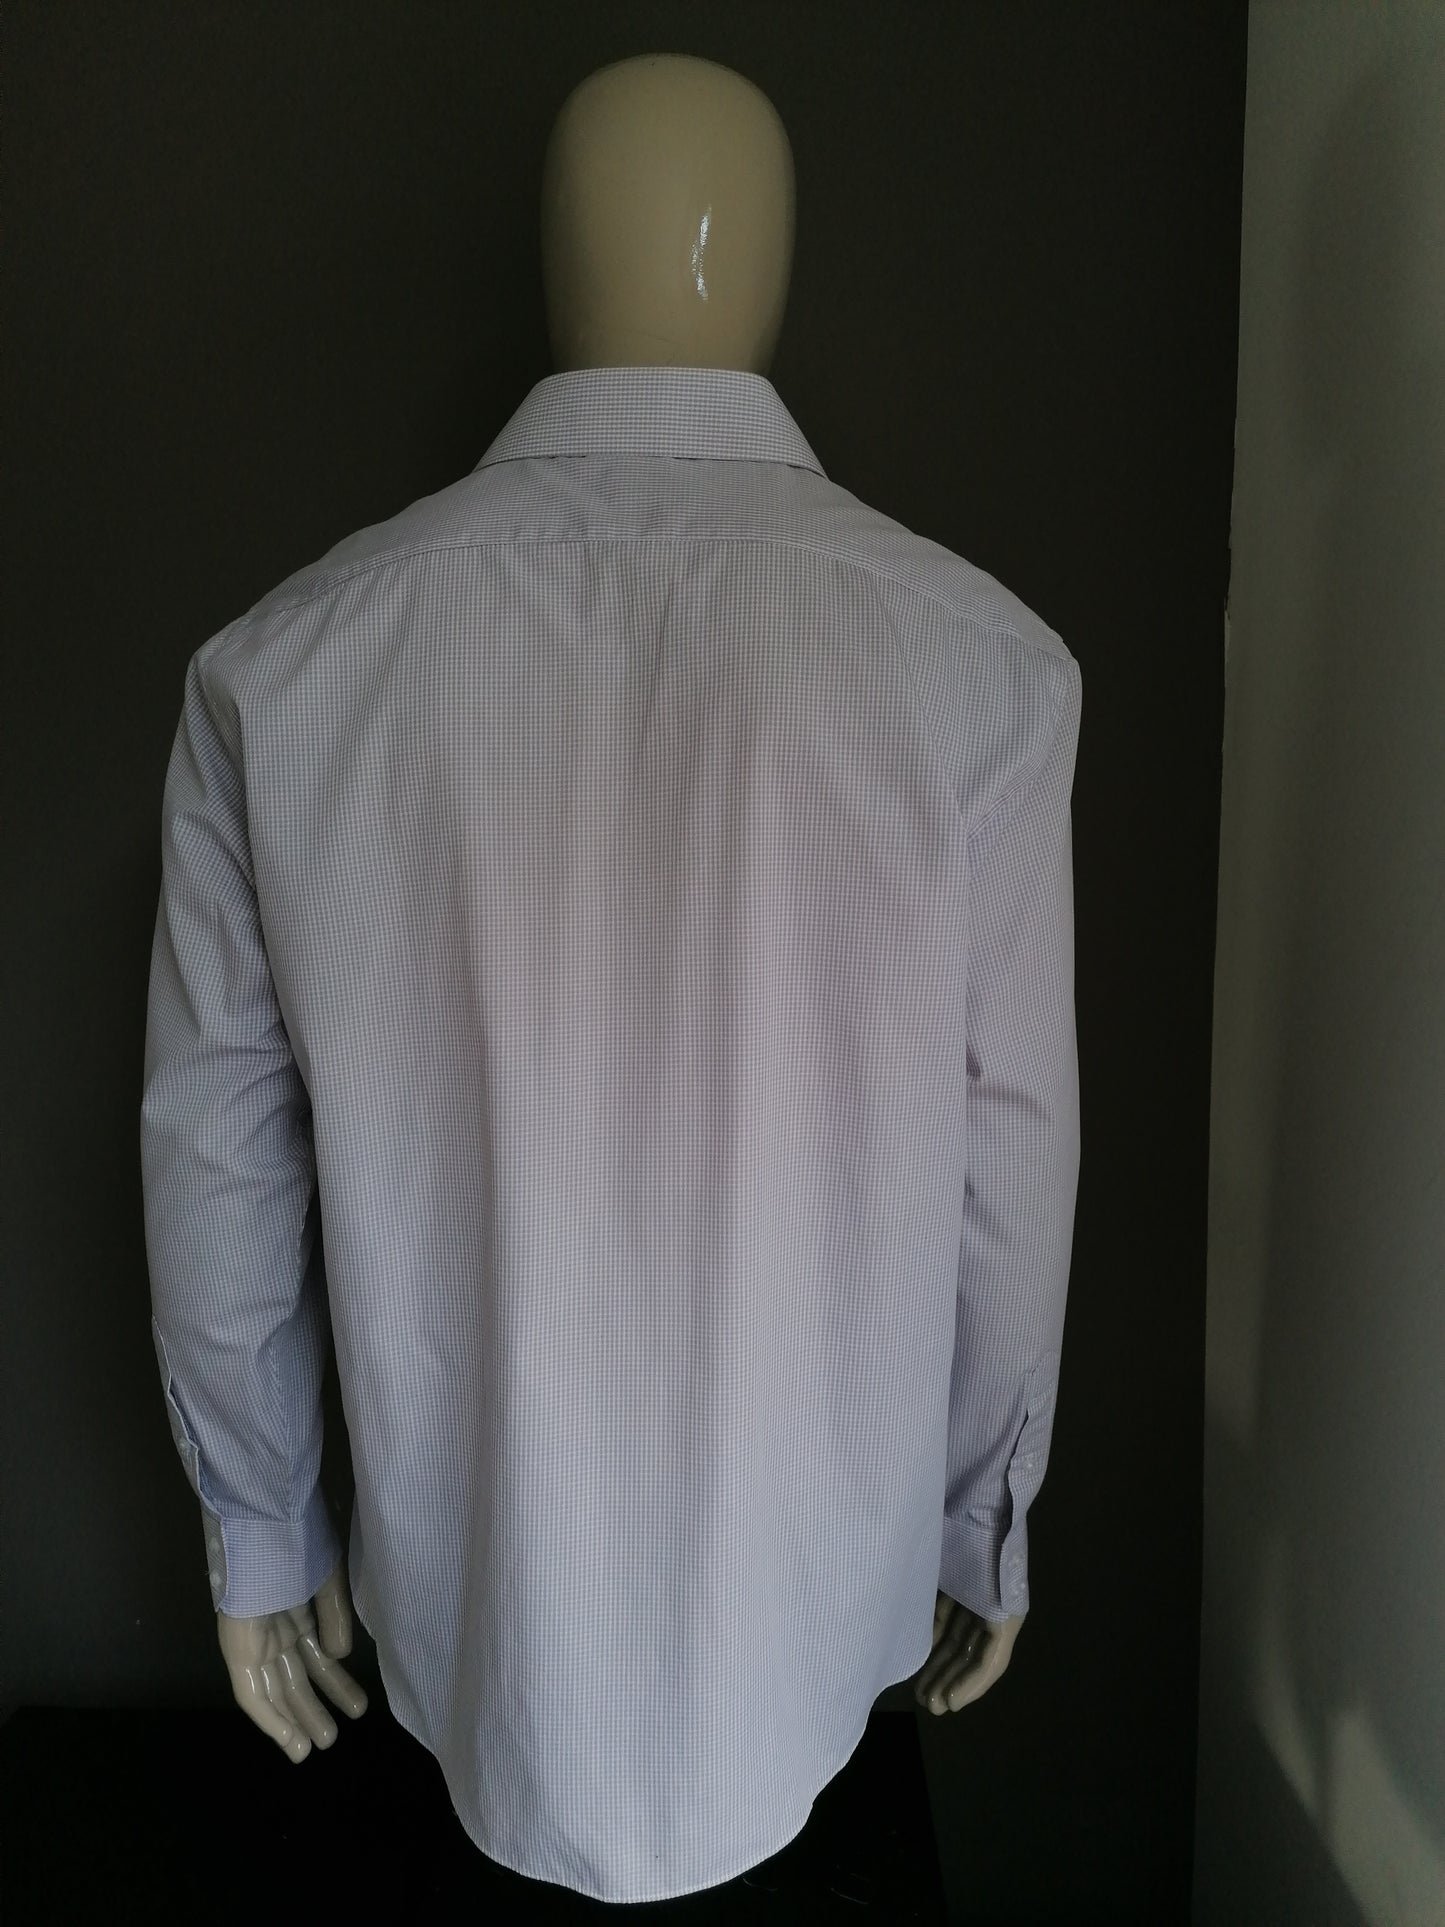 Taylor & Wright Shirt. Motivo blanco gris. Tamaño XL / XXL. Ajuste regular. Cae grandes